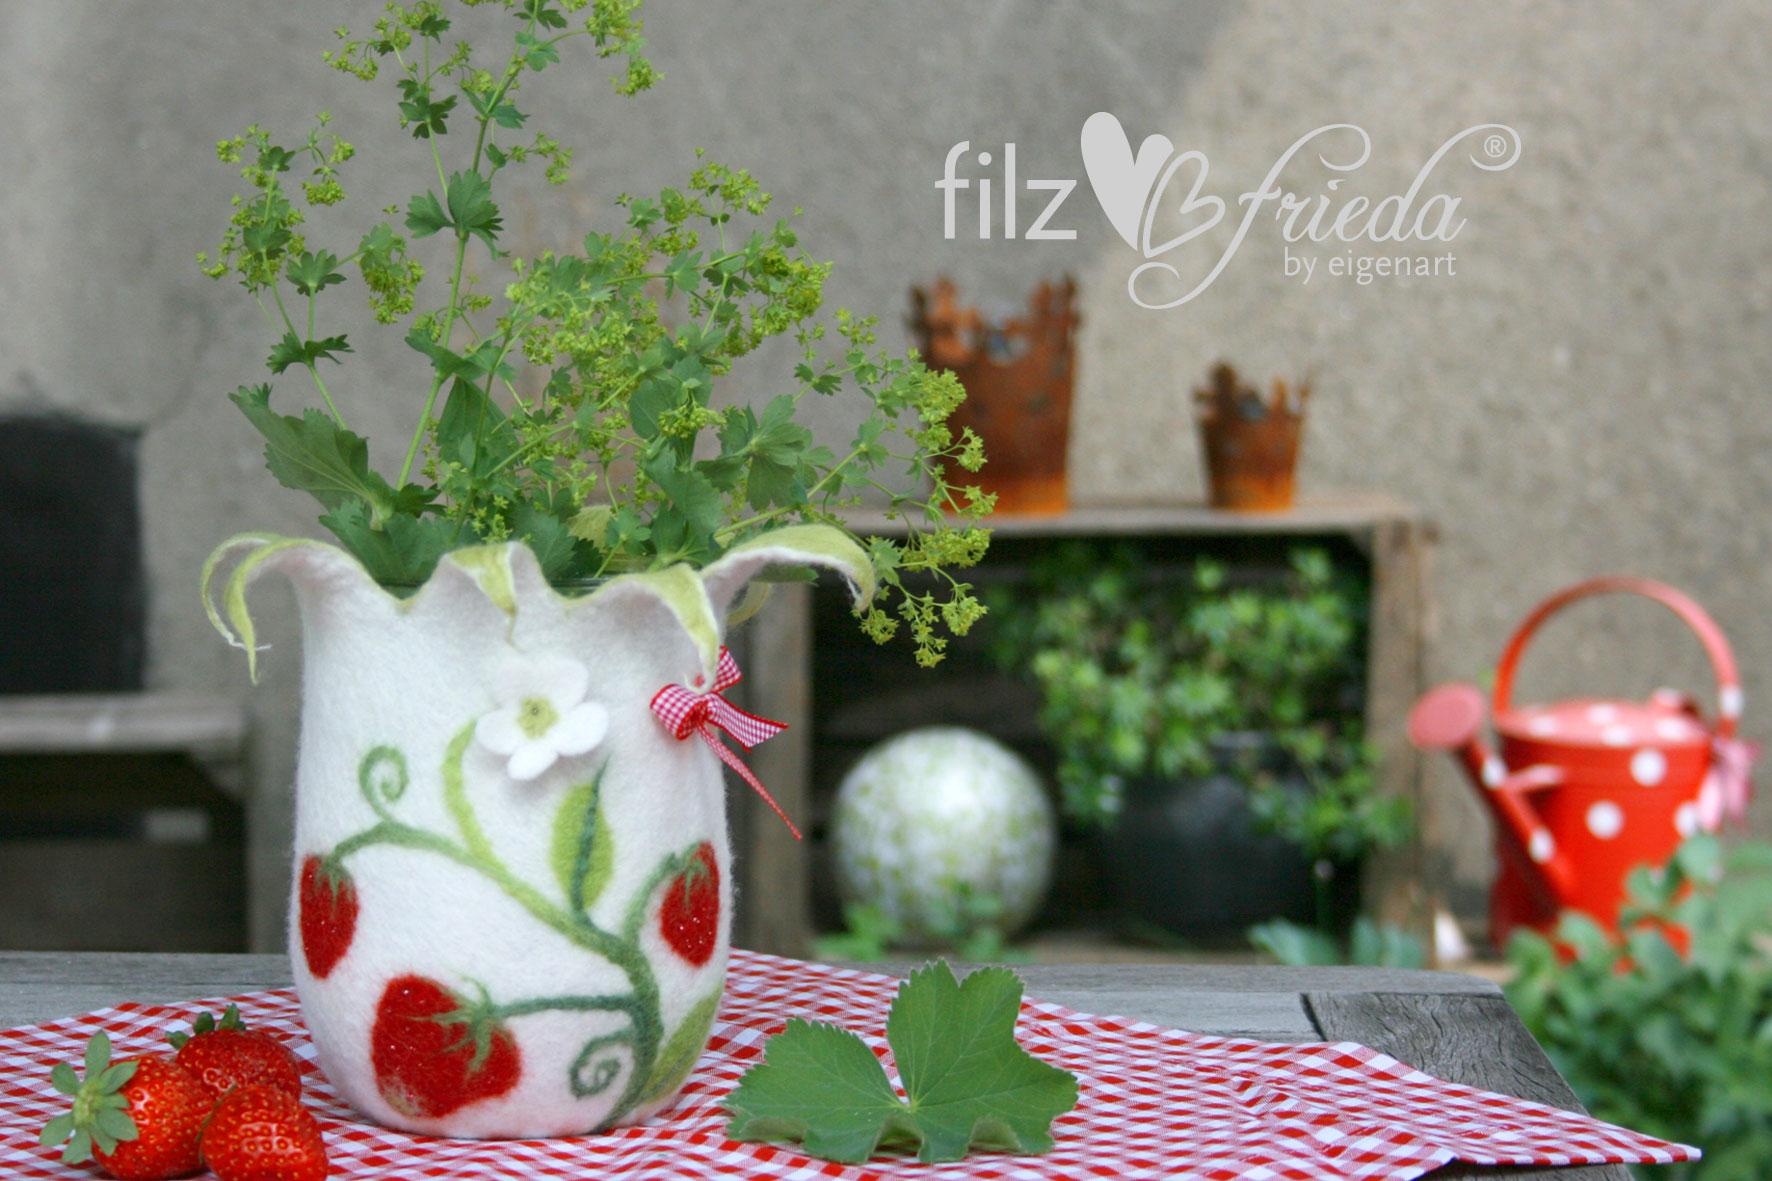 Filzen im Erdbeerfieber … Plätze frei!